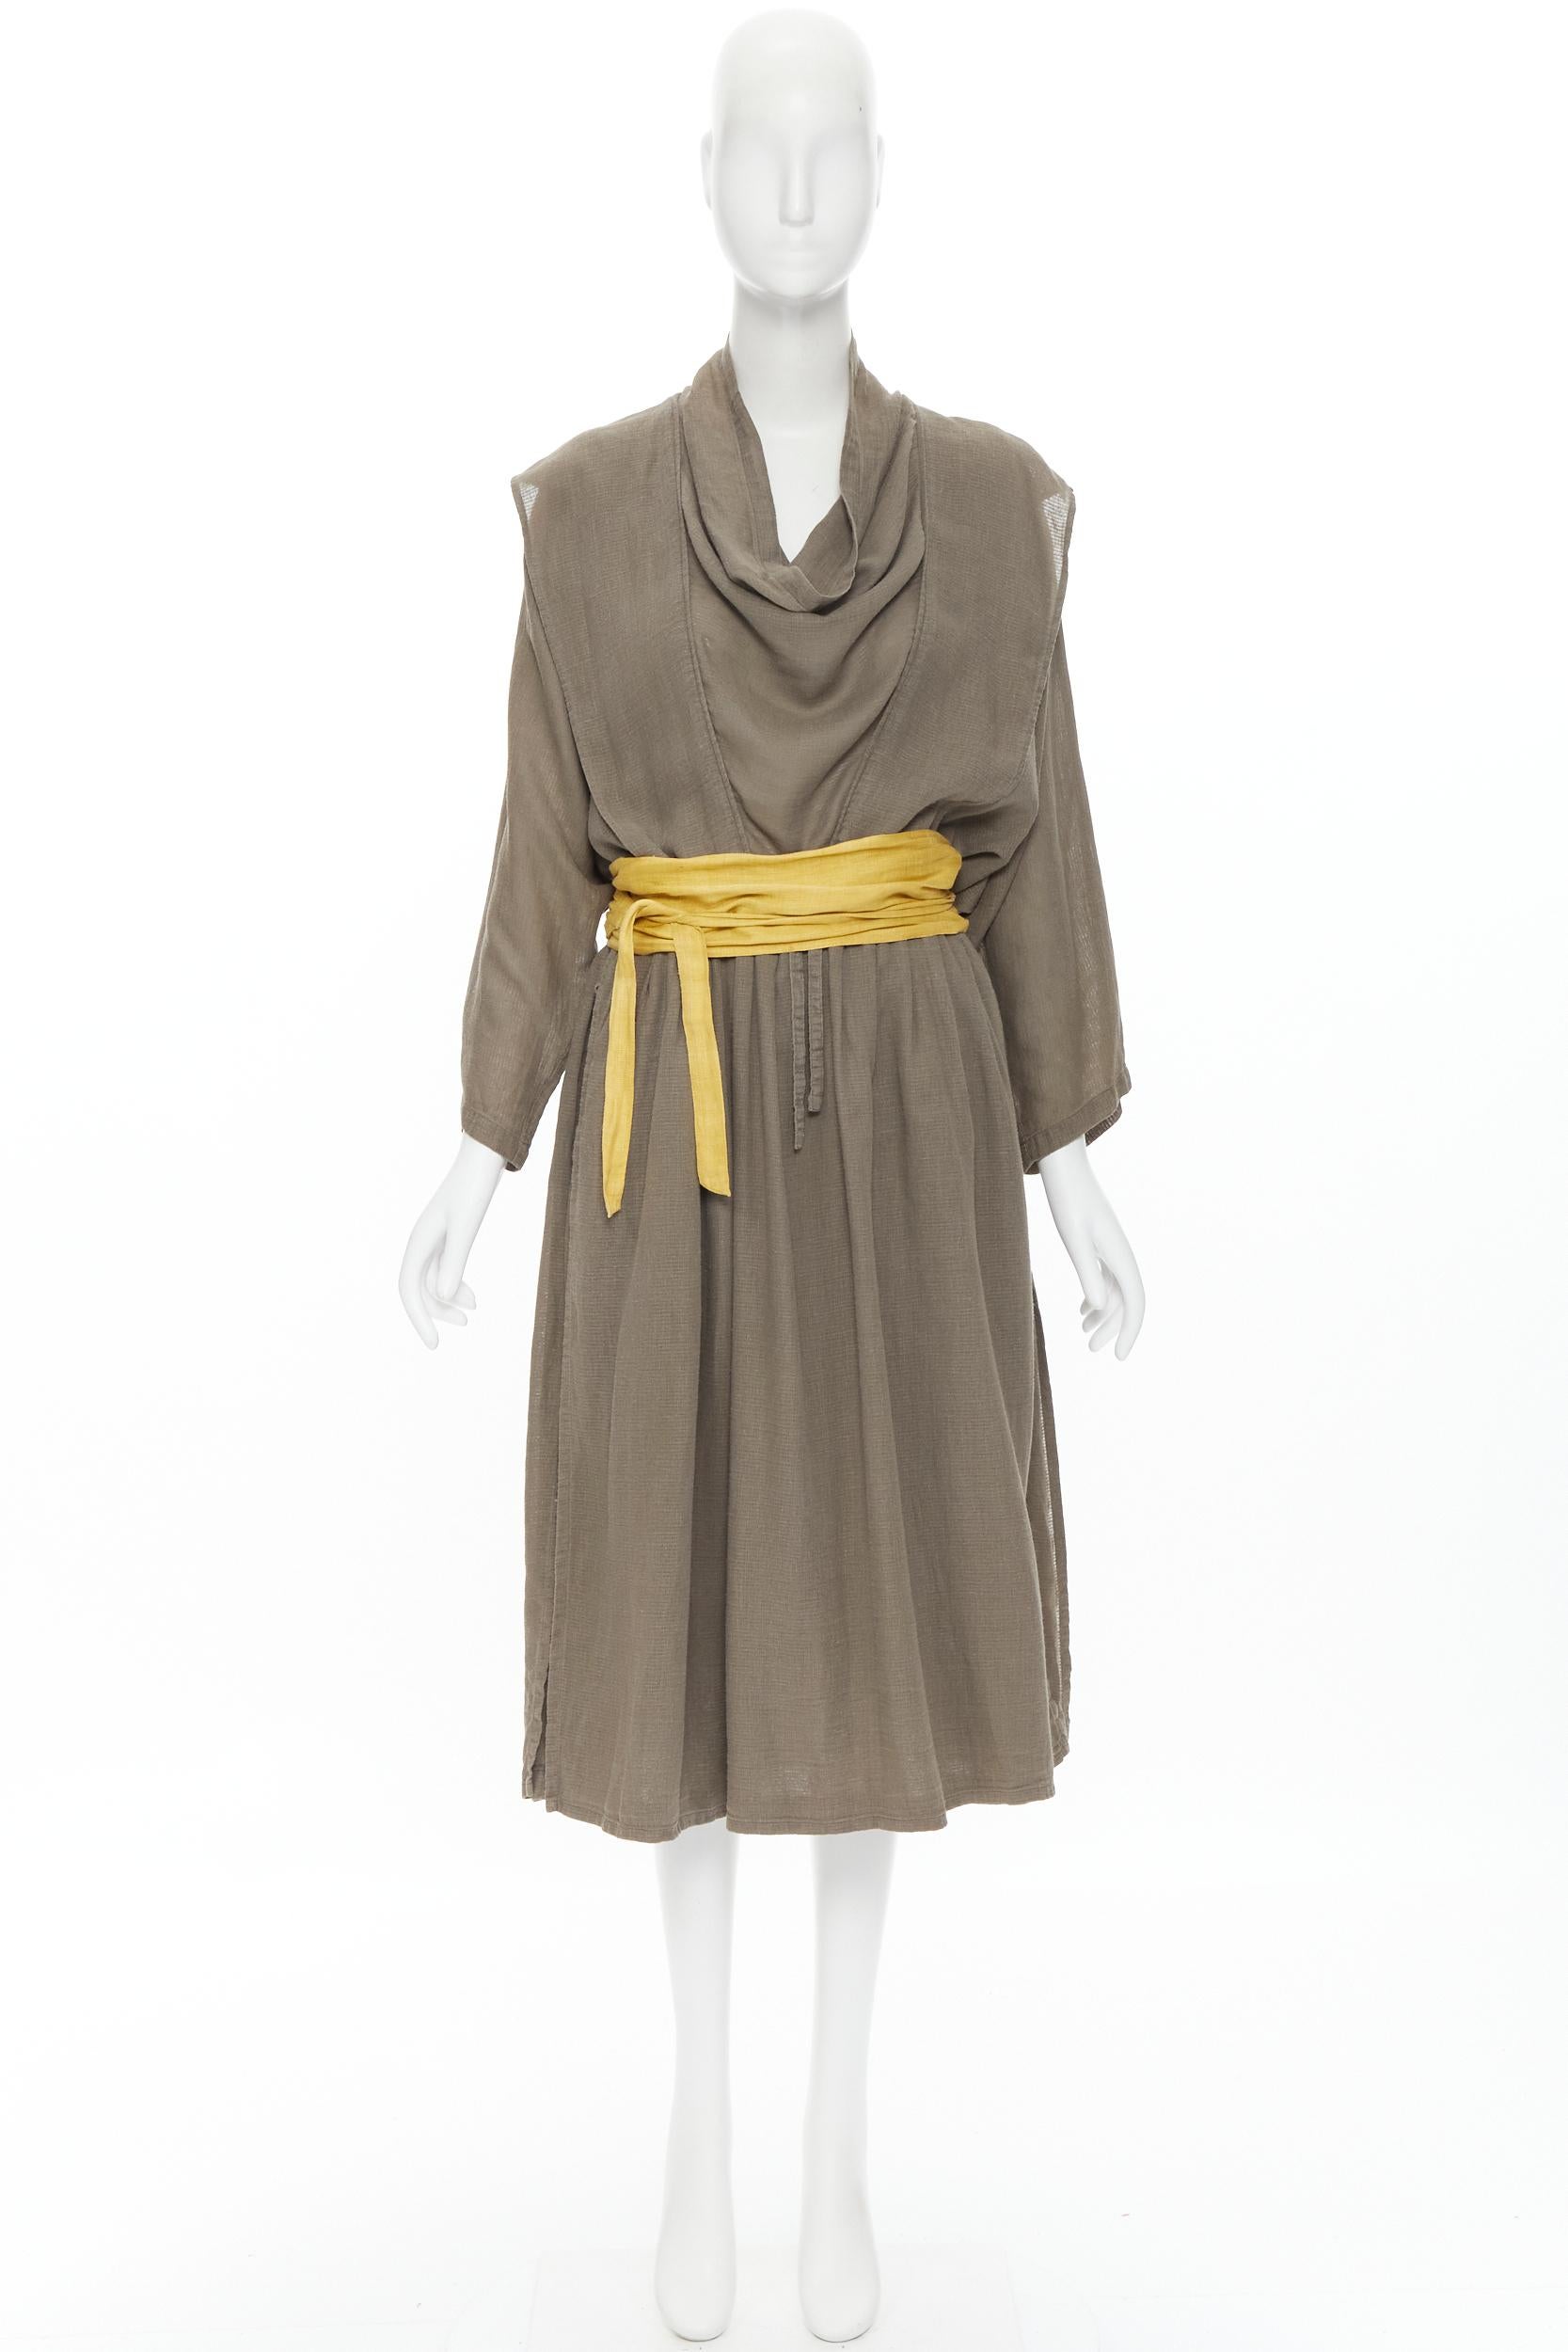 vintage ISSEY MIYAKE 1980's beige linen yellow obi belt cowl neck dress M rare For Sale 6